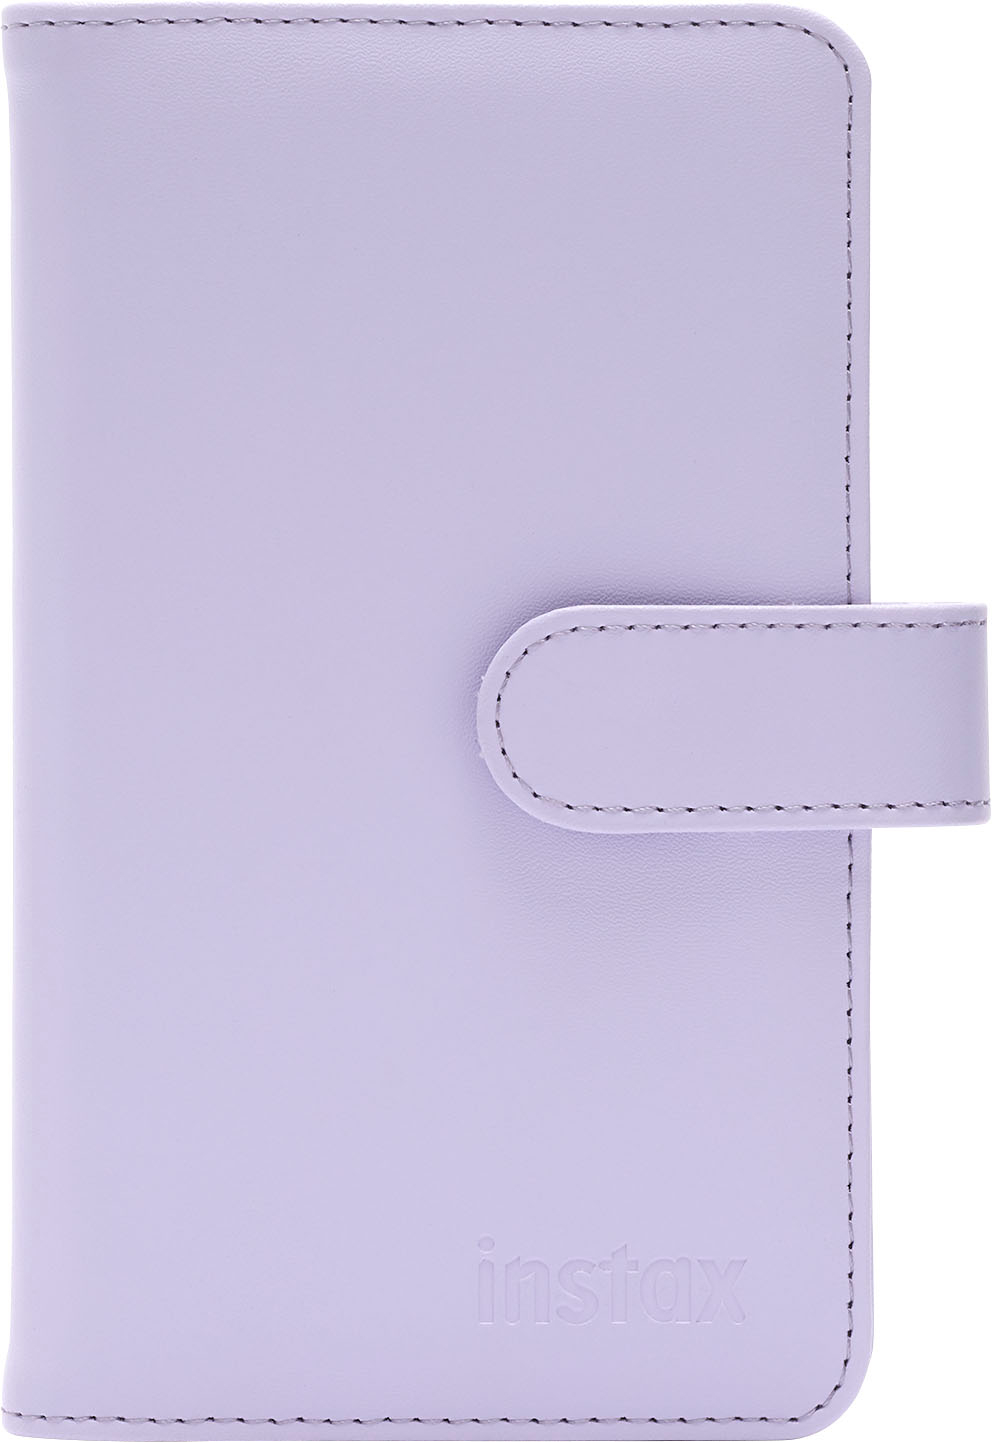 instax mini album lilac purple - INSTAX Instant Photography